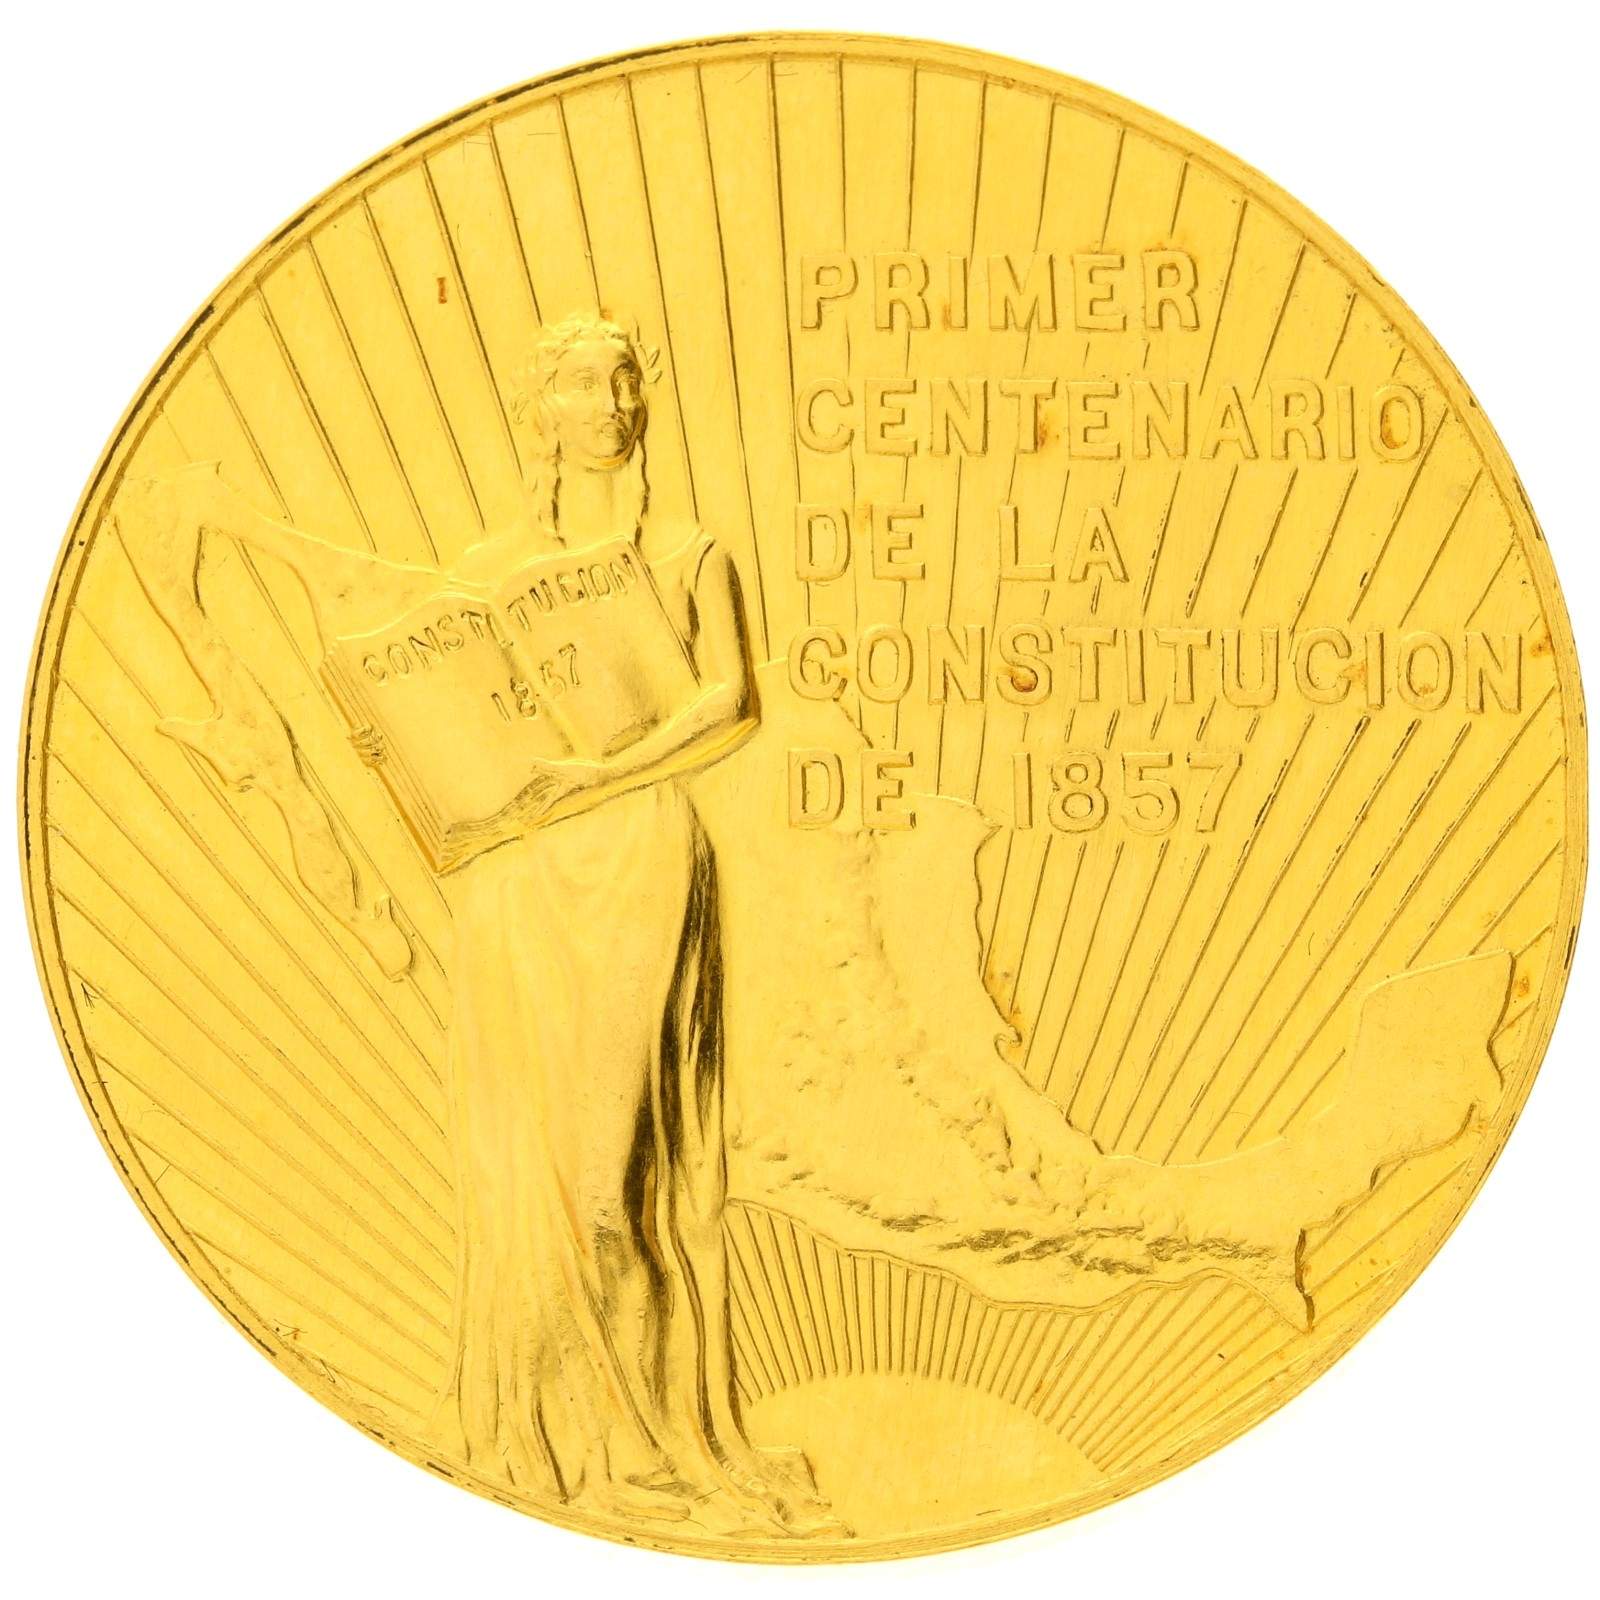 Mexico - 50 pesos - 1957 - Medallic issue - Centennial of Constitution